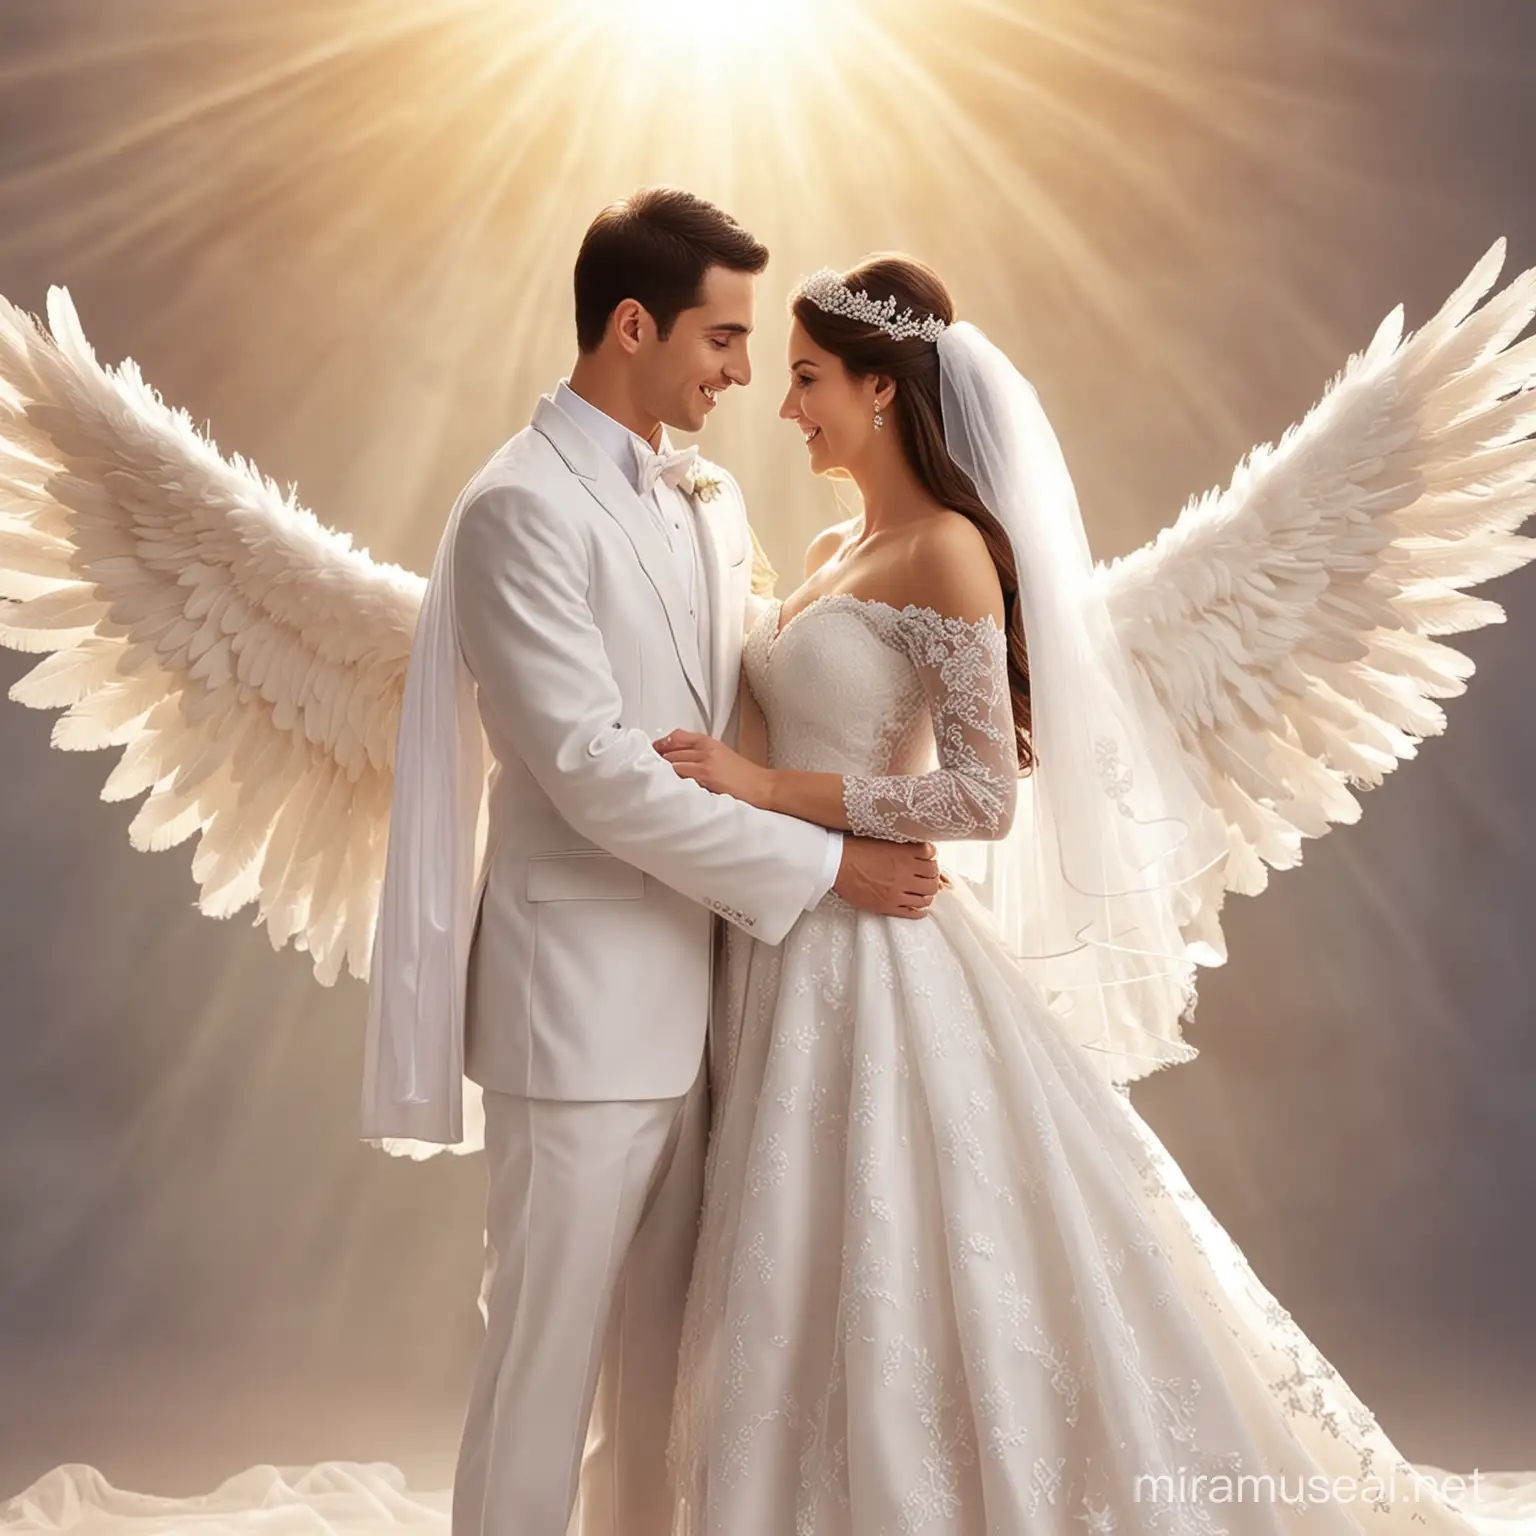 Joyful Couples Celestial Union Amidst Angelic Surroundings